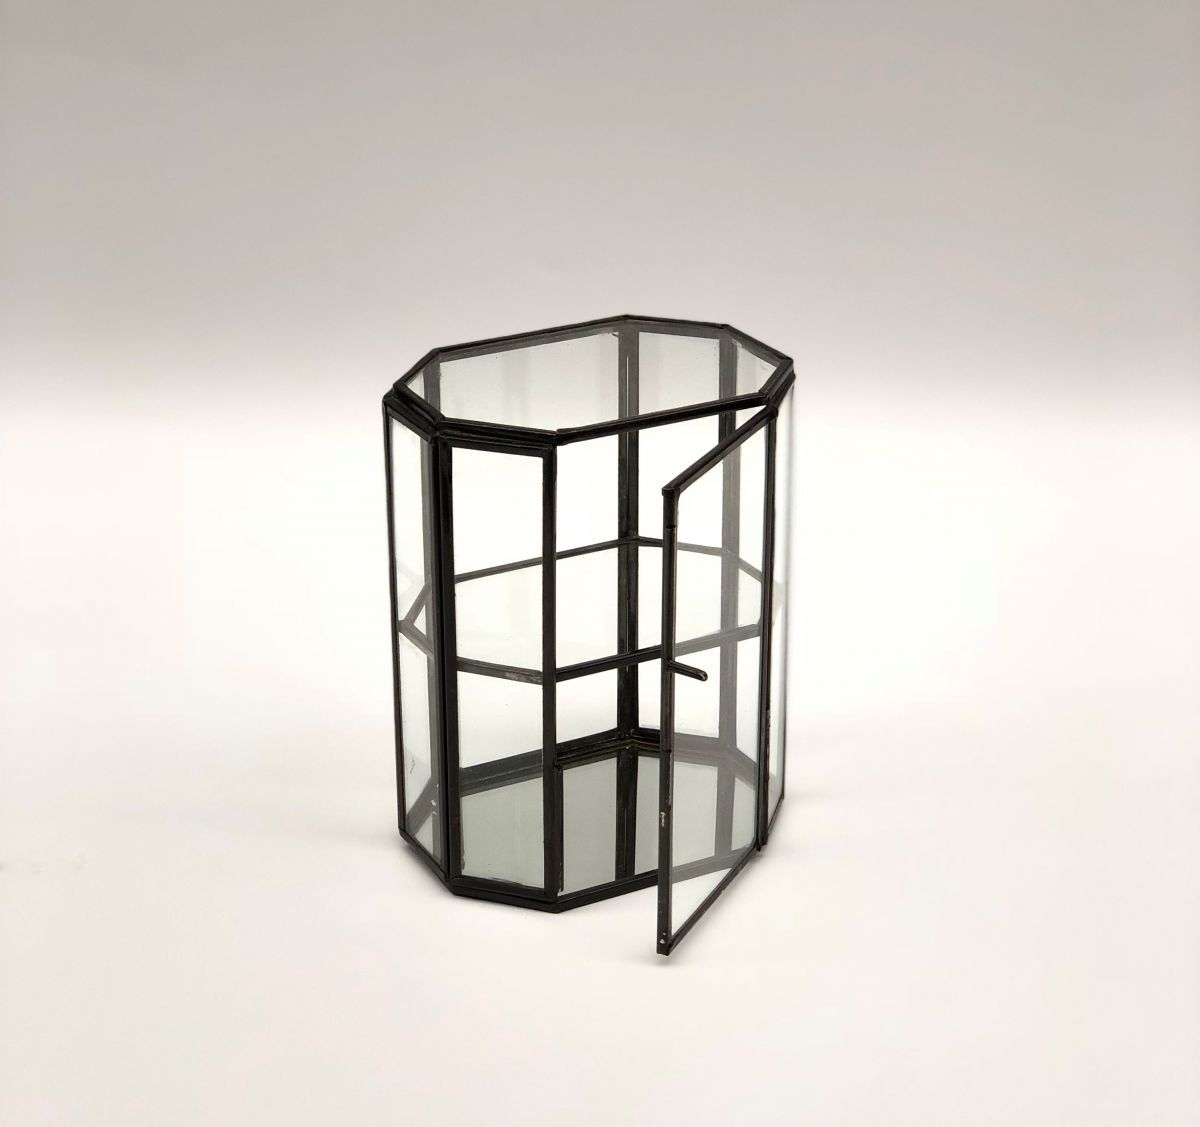 glass box with black metal 2tier br 13 x 95 hg 164cm